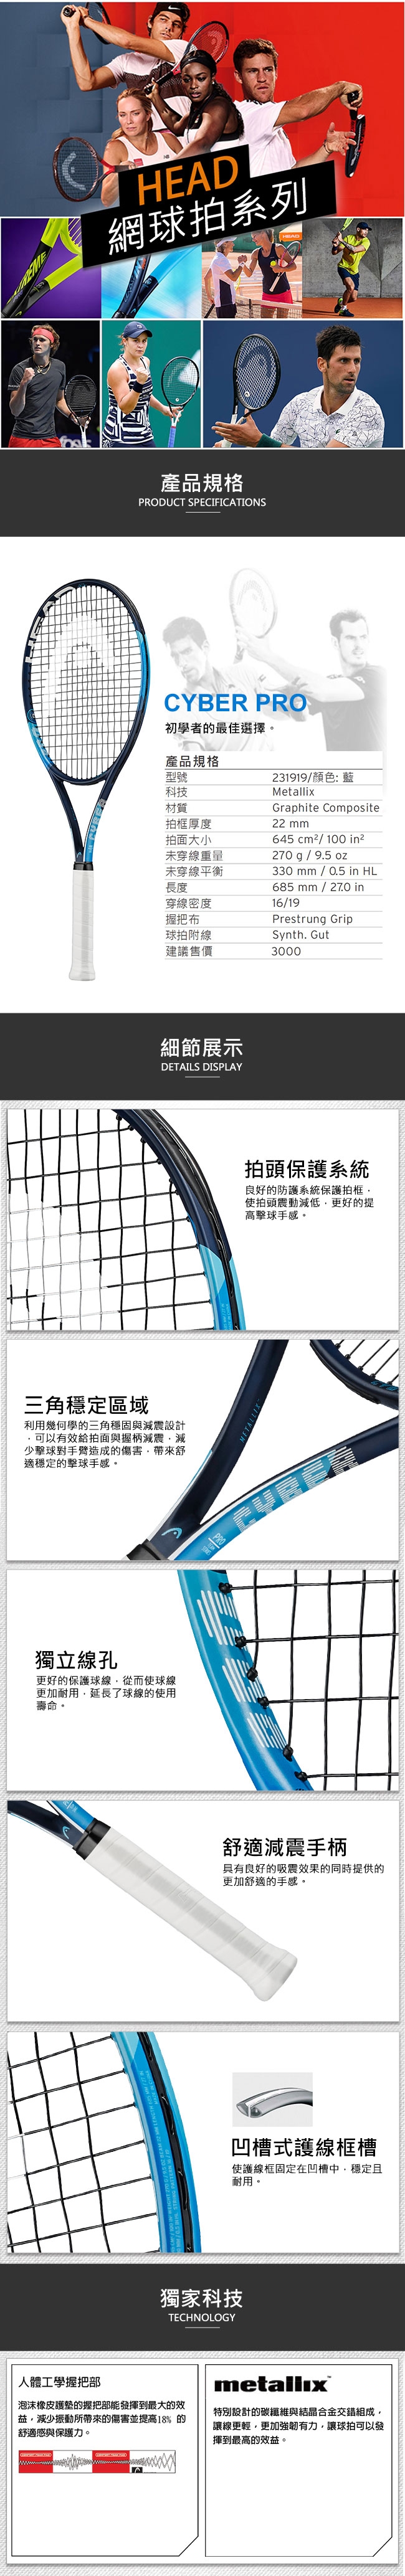 HEAD Cyber Pro 270g 初學入門款 網球拍 231919